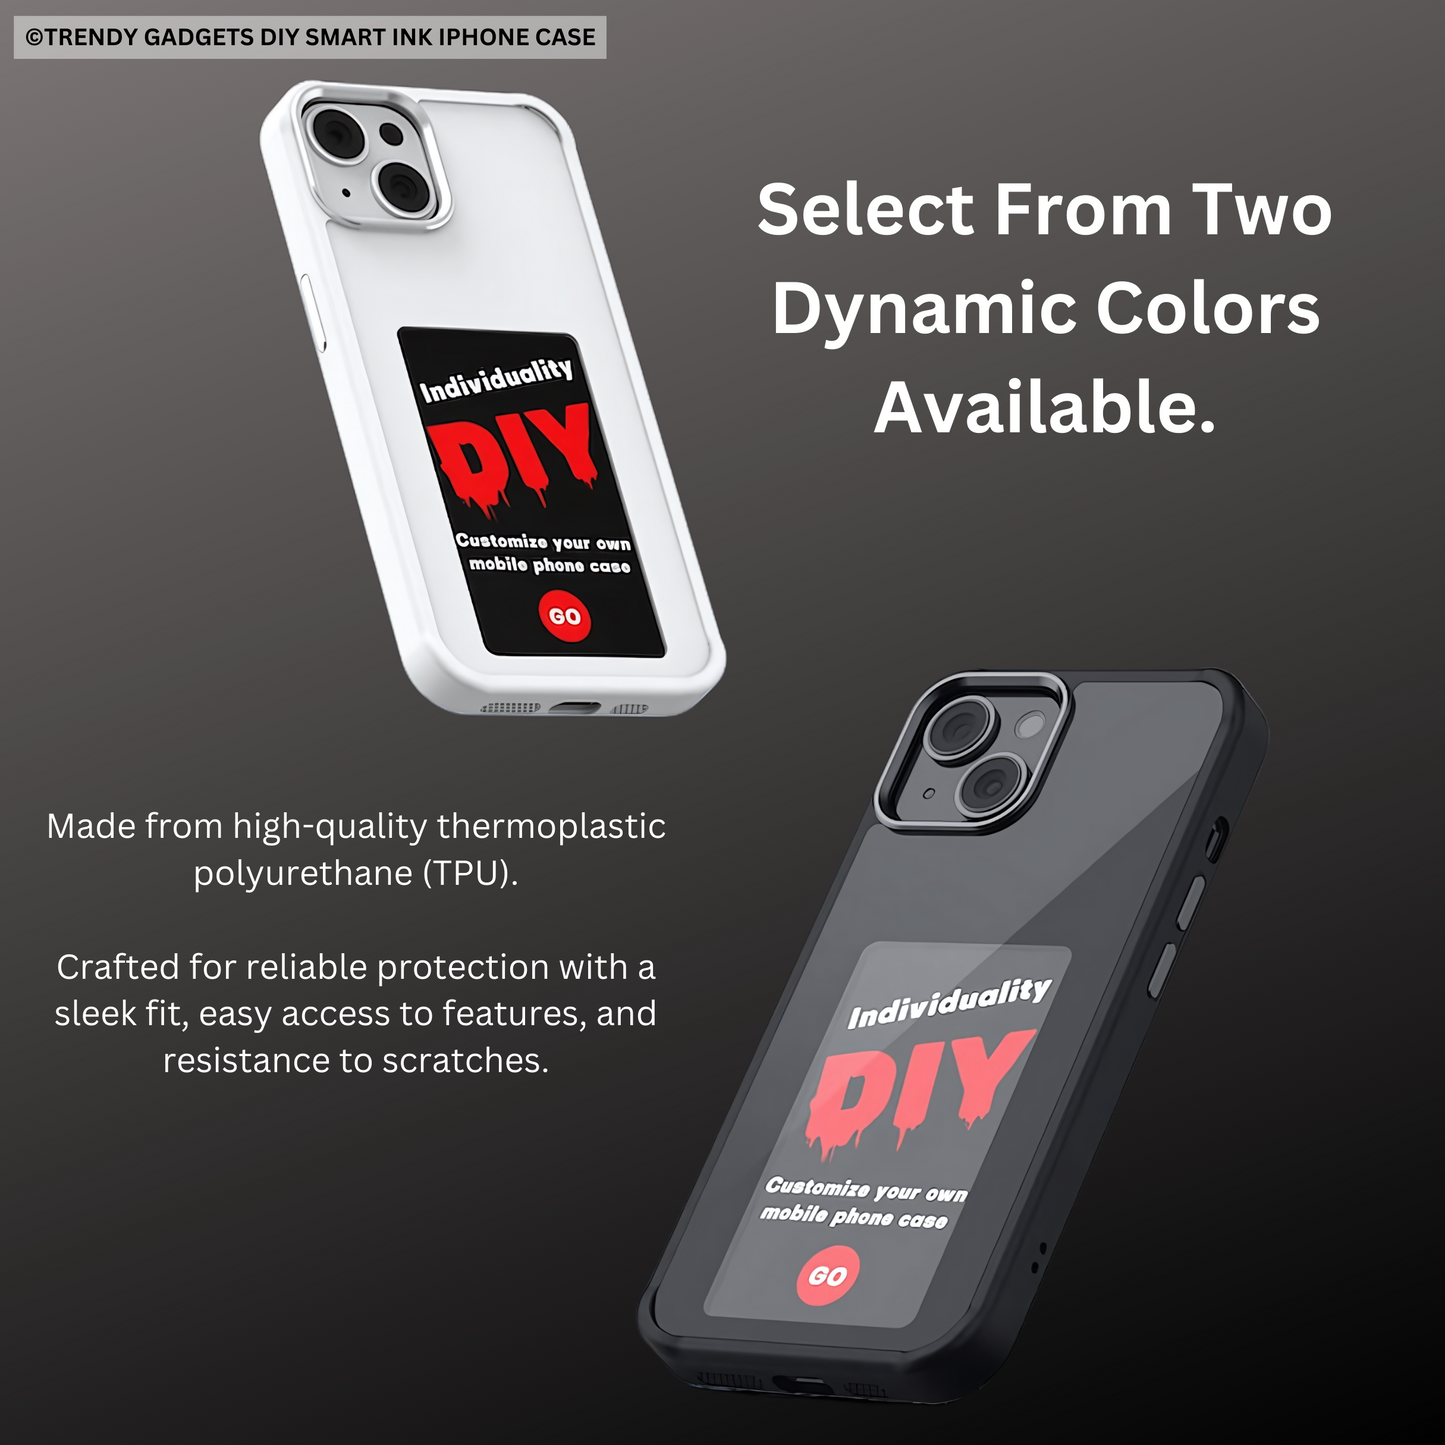 ©️TG DIY Smart Ink iPhone Case